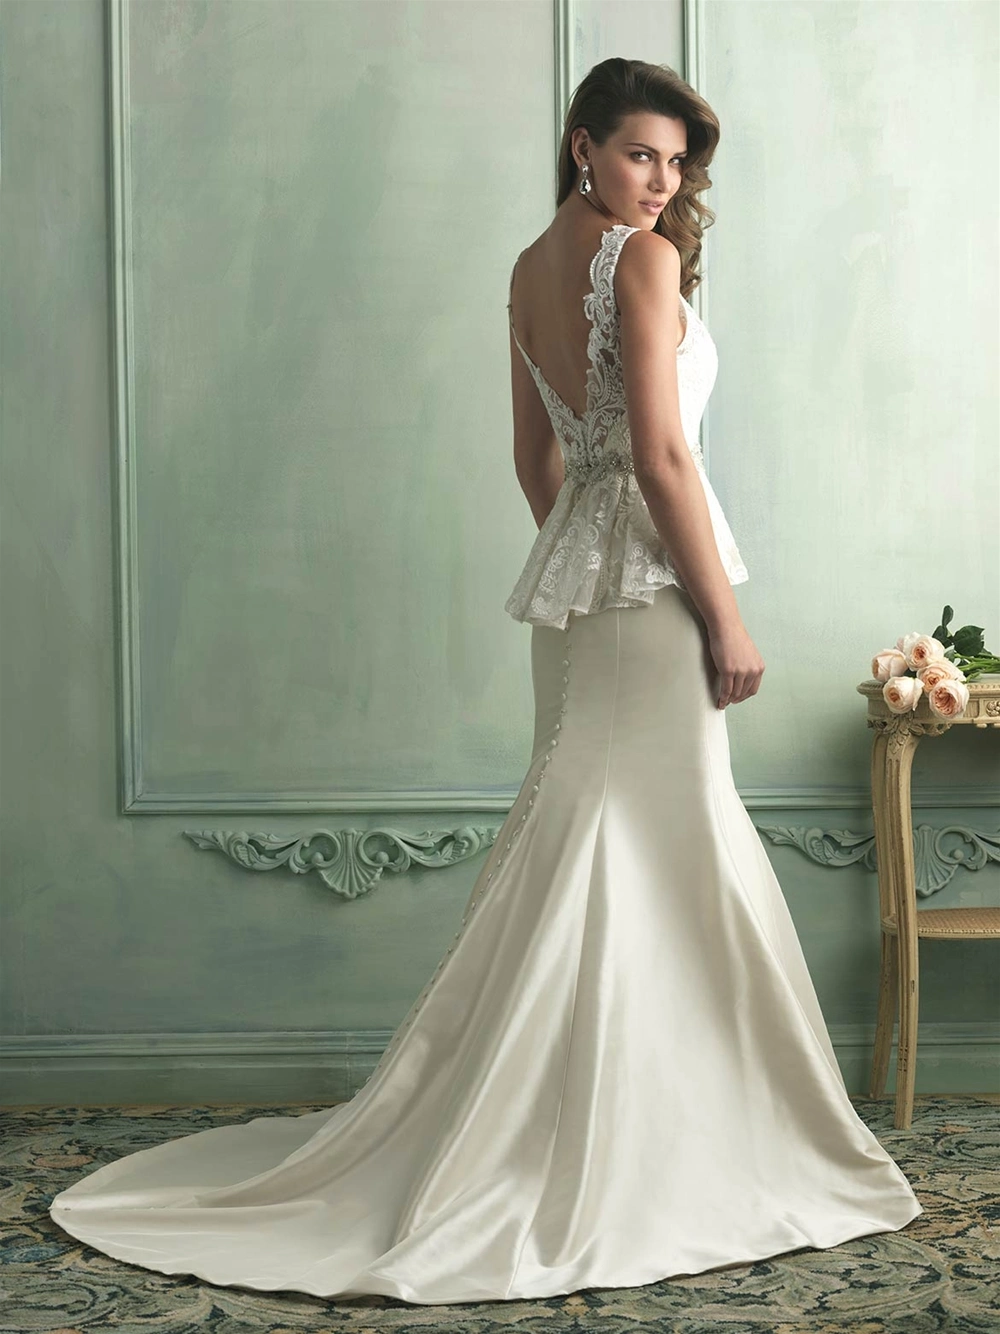 Top Lace Taffeta Ivory Bridal Gowns for Wedding Ladies Beading Waist Sexy Bakless Mermaid Wedding Dress